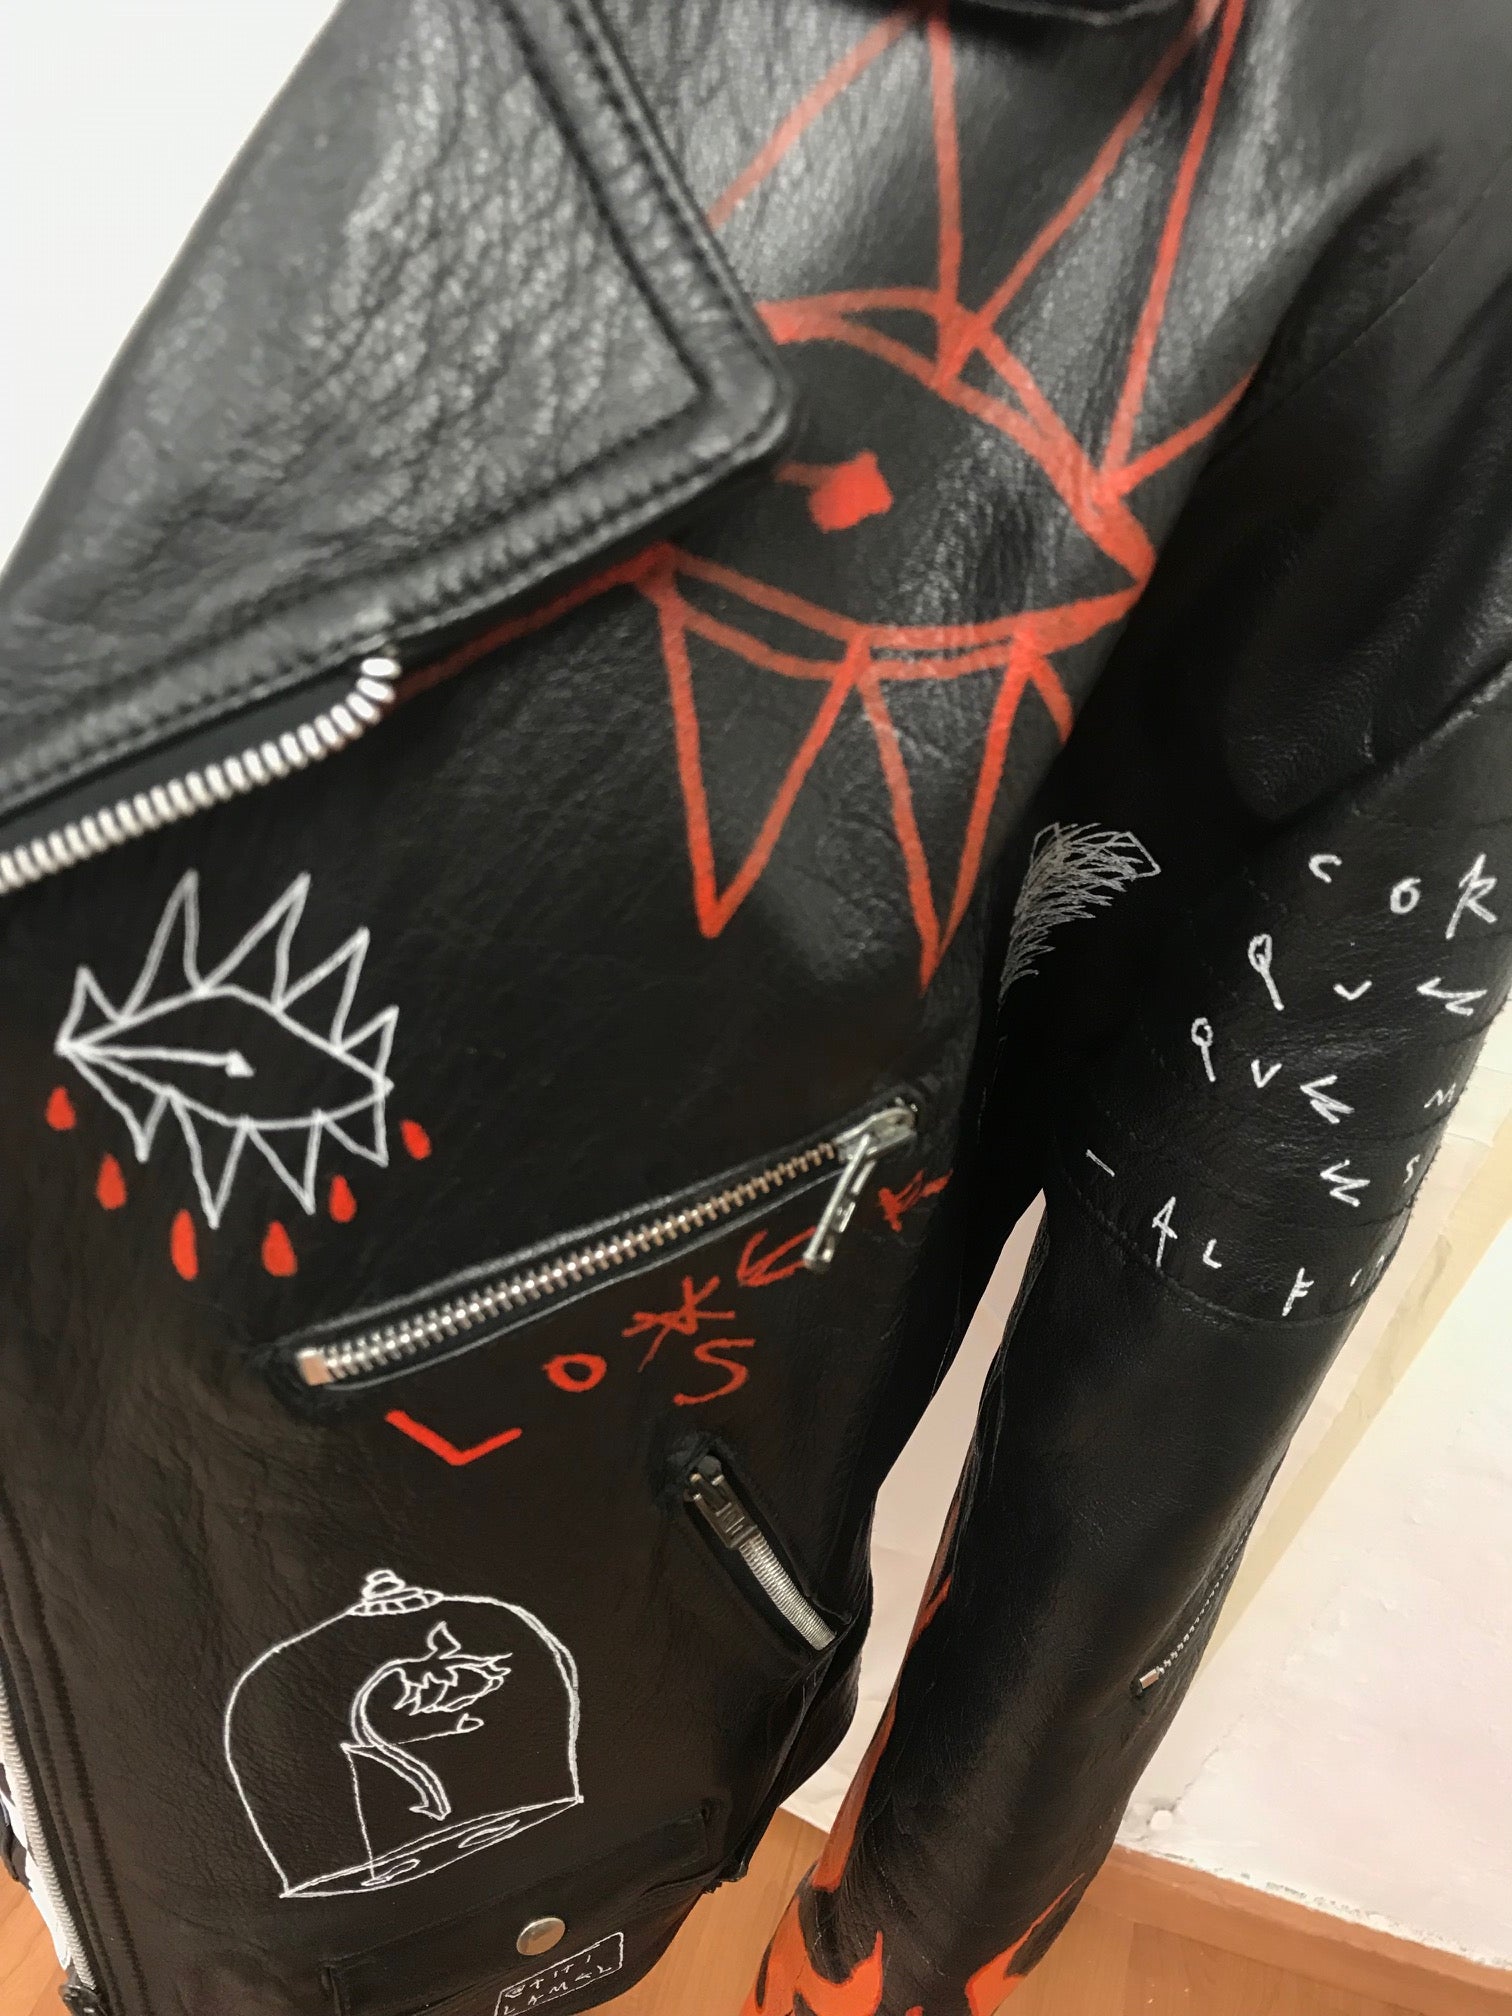 punks & poets – biker jacket